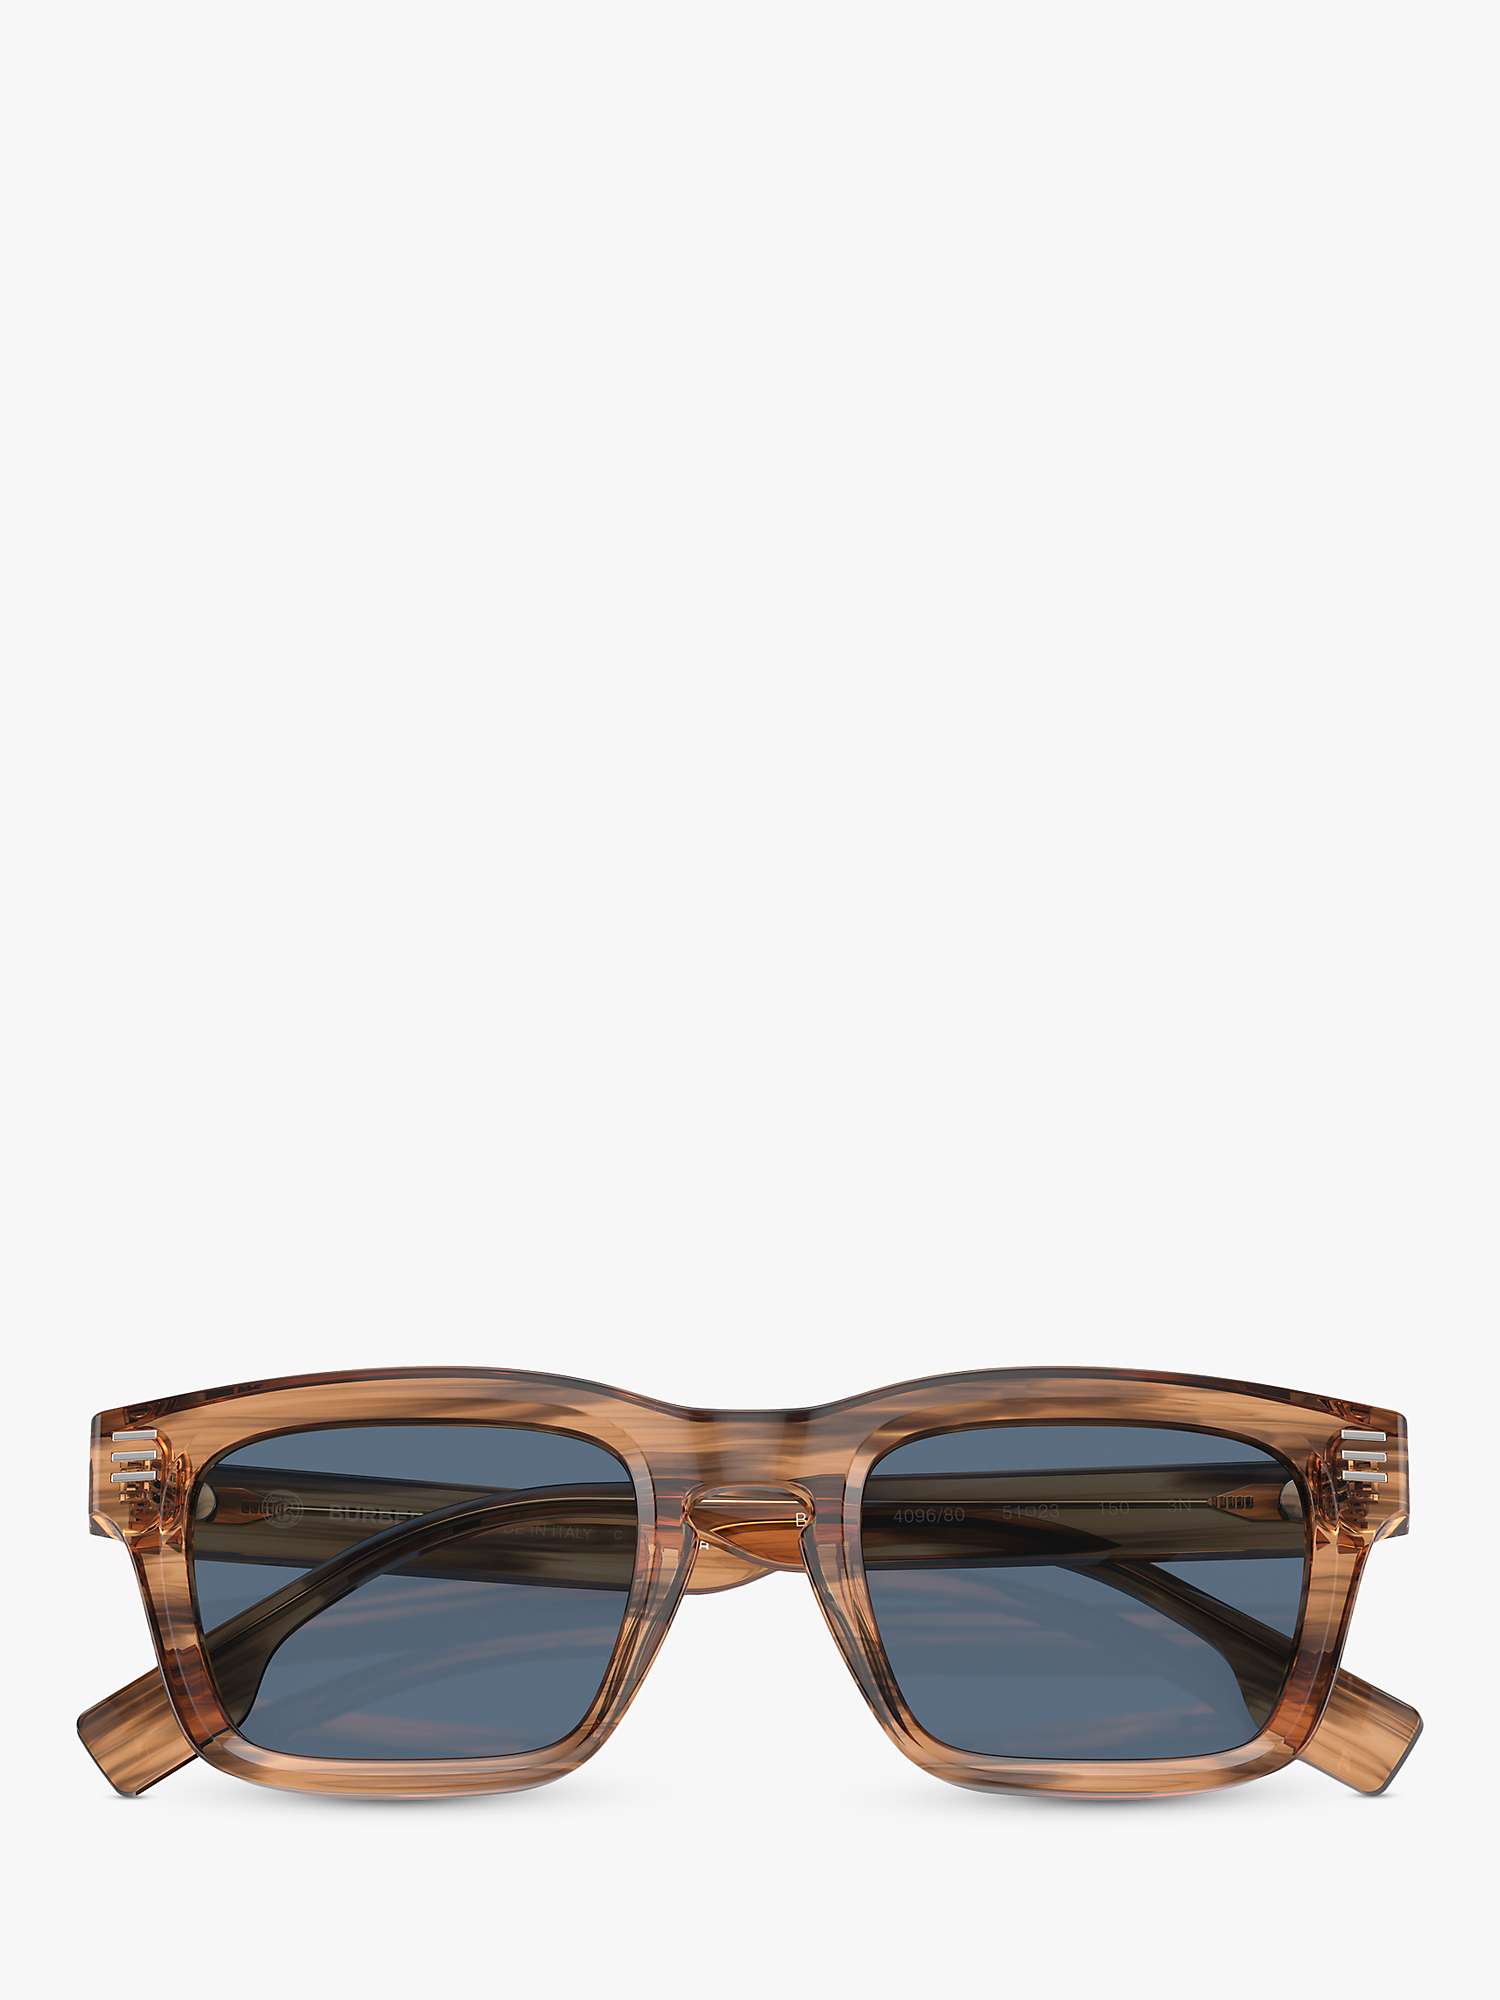 Buy Burberry BE4403 Men's D-Frame Sunglasses, Brown/Blue Online at johnlewis.com